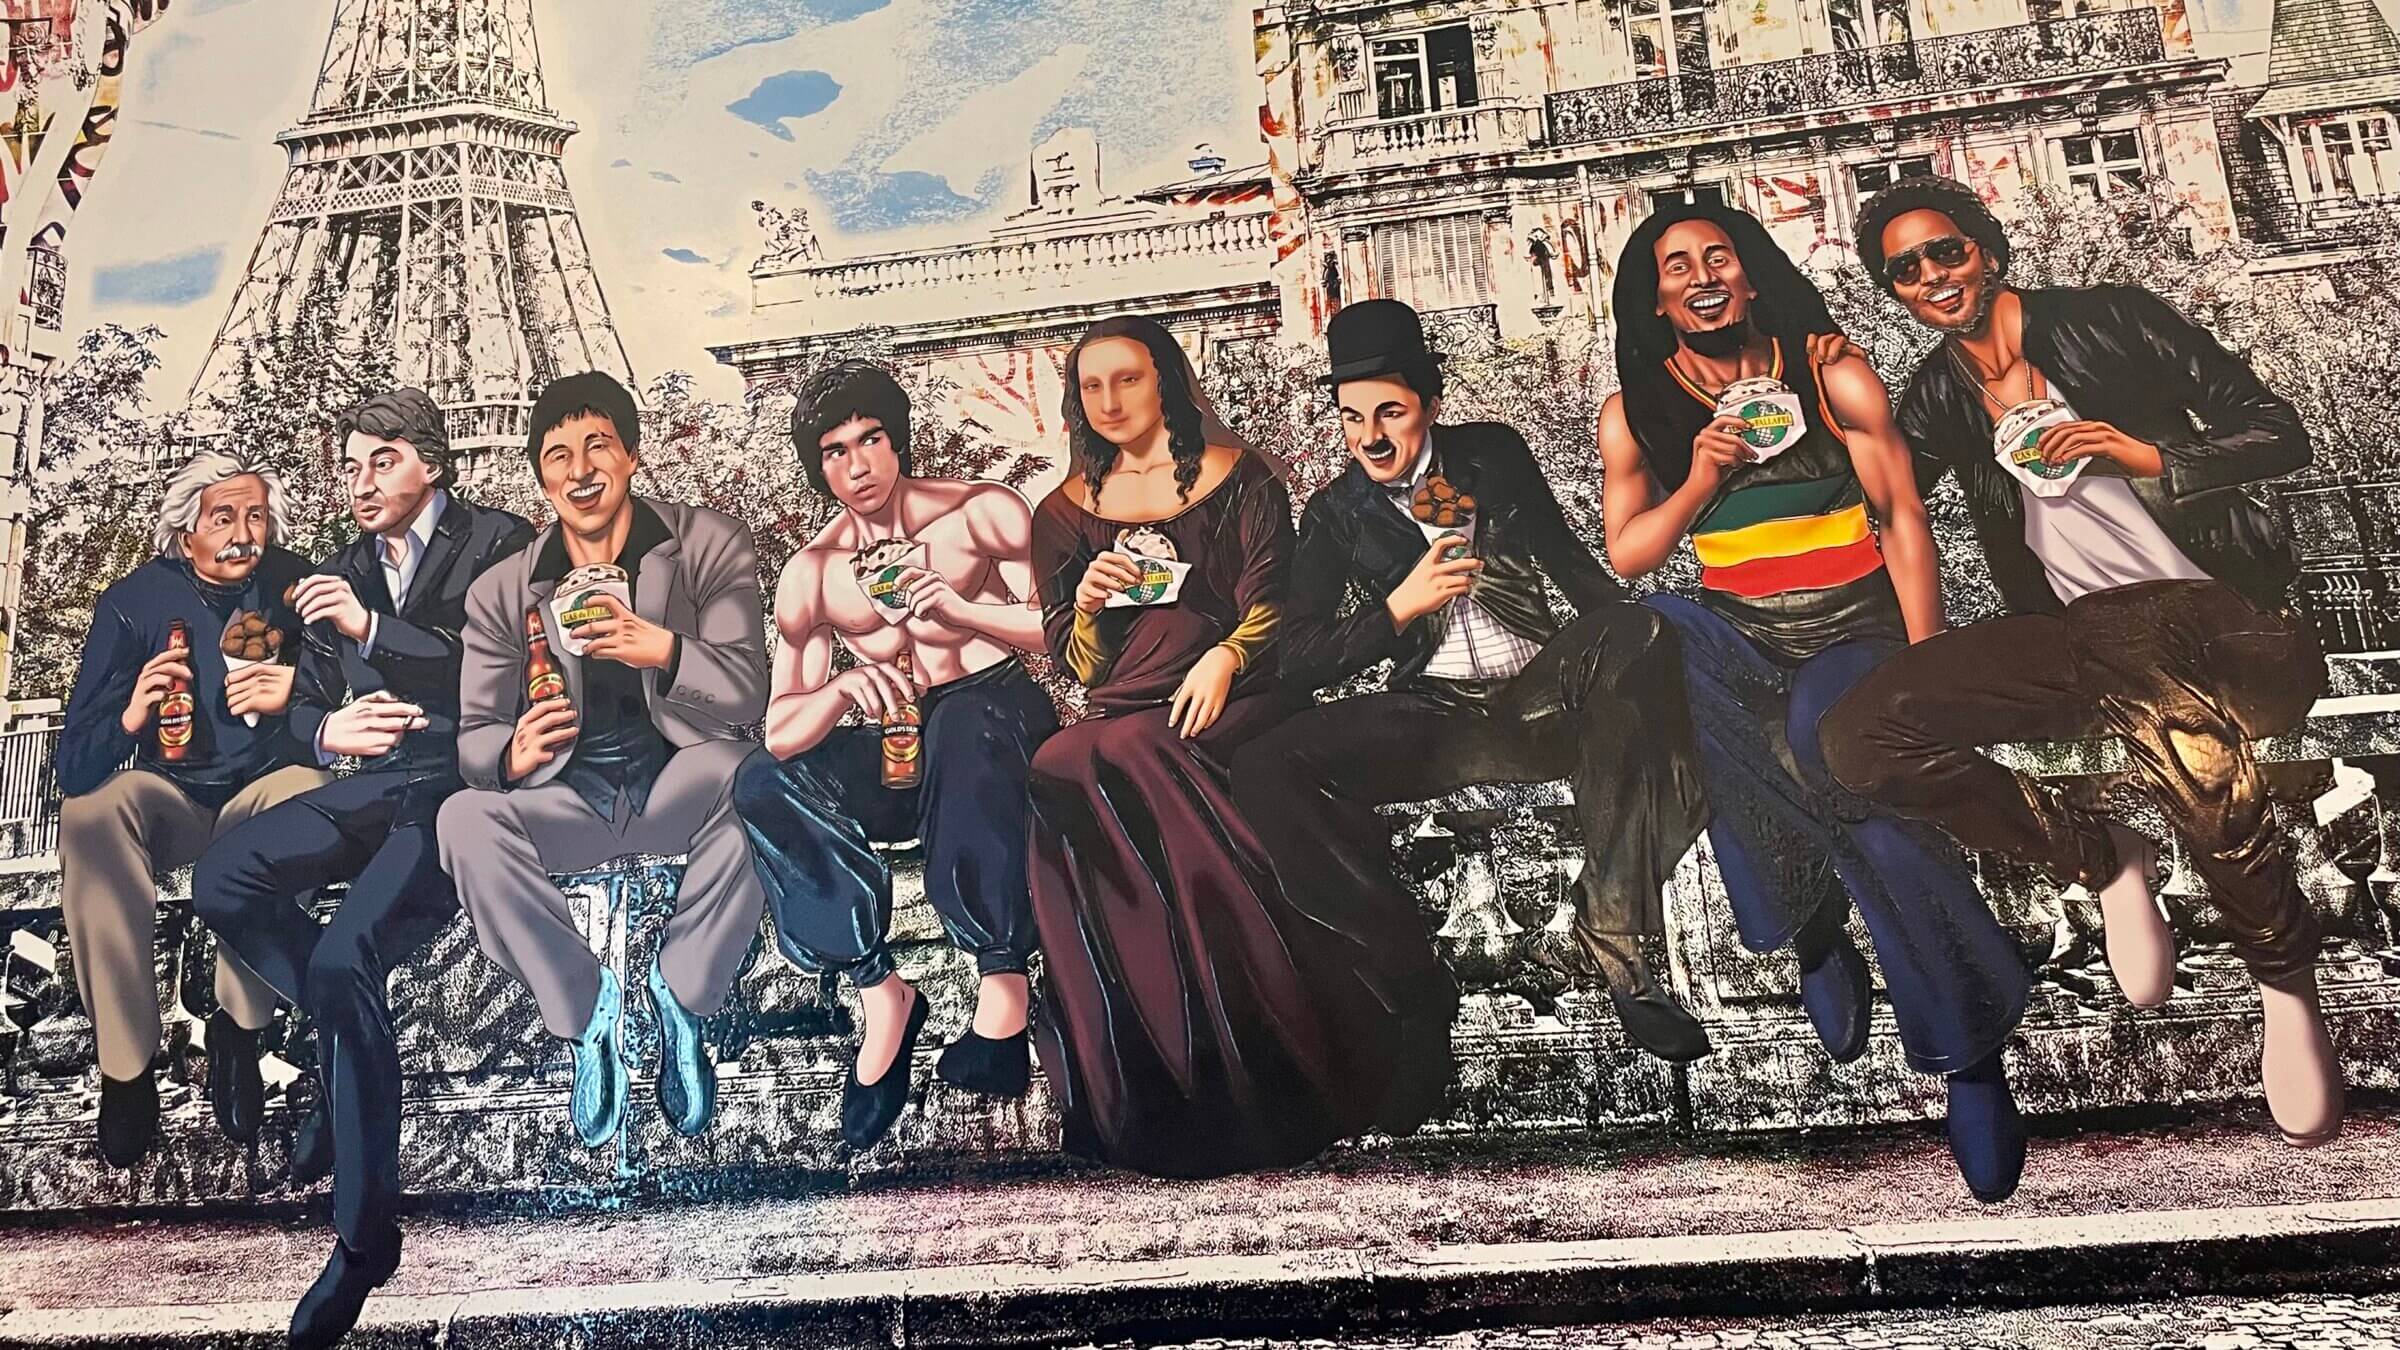 Lenny Kravitz, Bob Marley, Albert Einstein, Charlie Chaplin, and the Mona Lisa are among those enjoying falafel on the Rue des Rosiers.